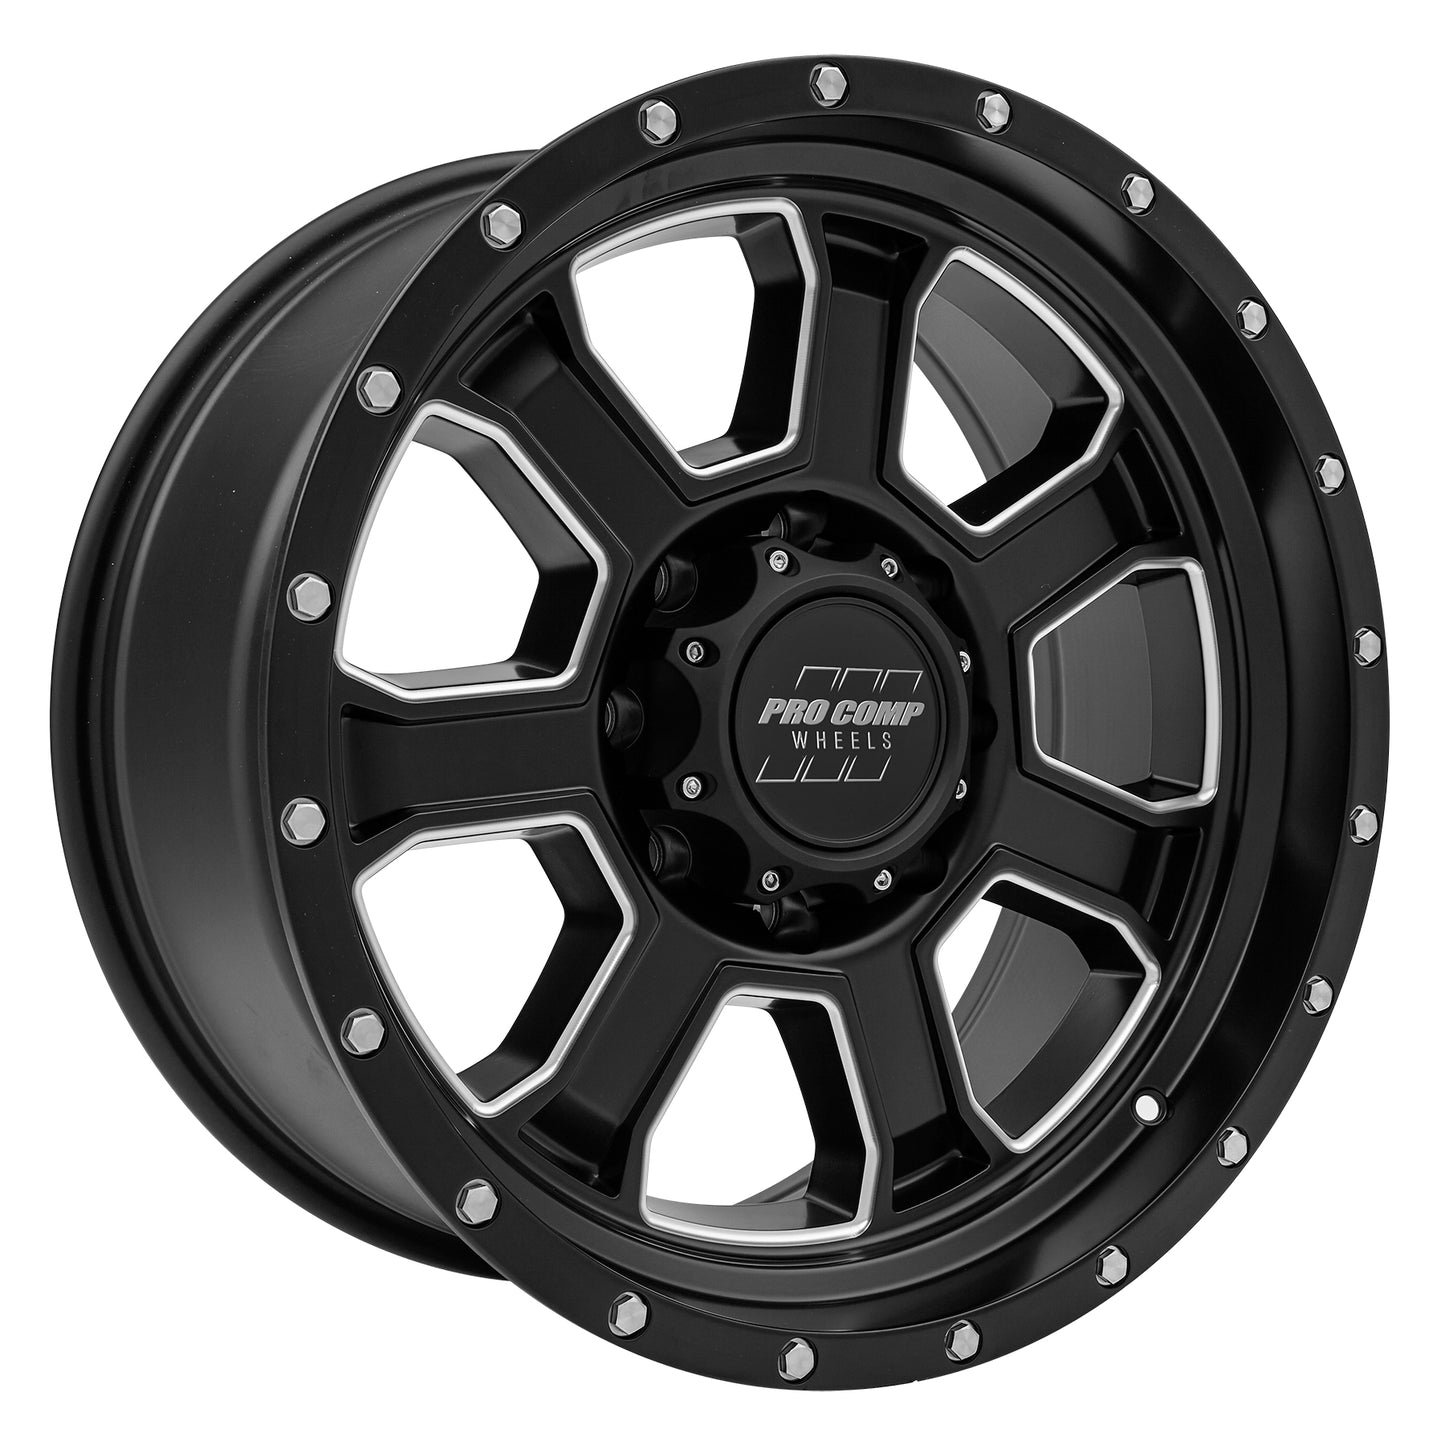 Pro Comp Wheels Sledge Satin Black Milled 20X9 8x170 5BS Offset 0mm Cap P/N 503451501 5143-2970